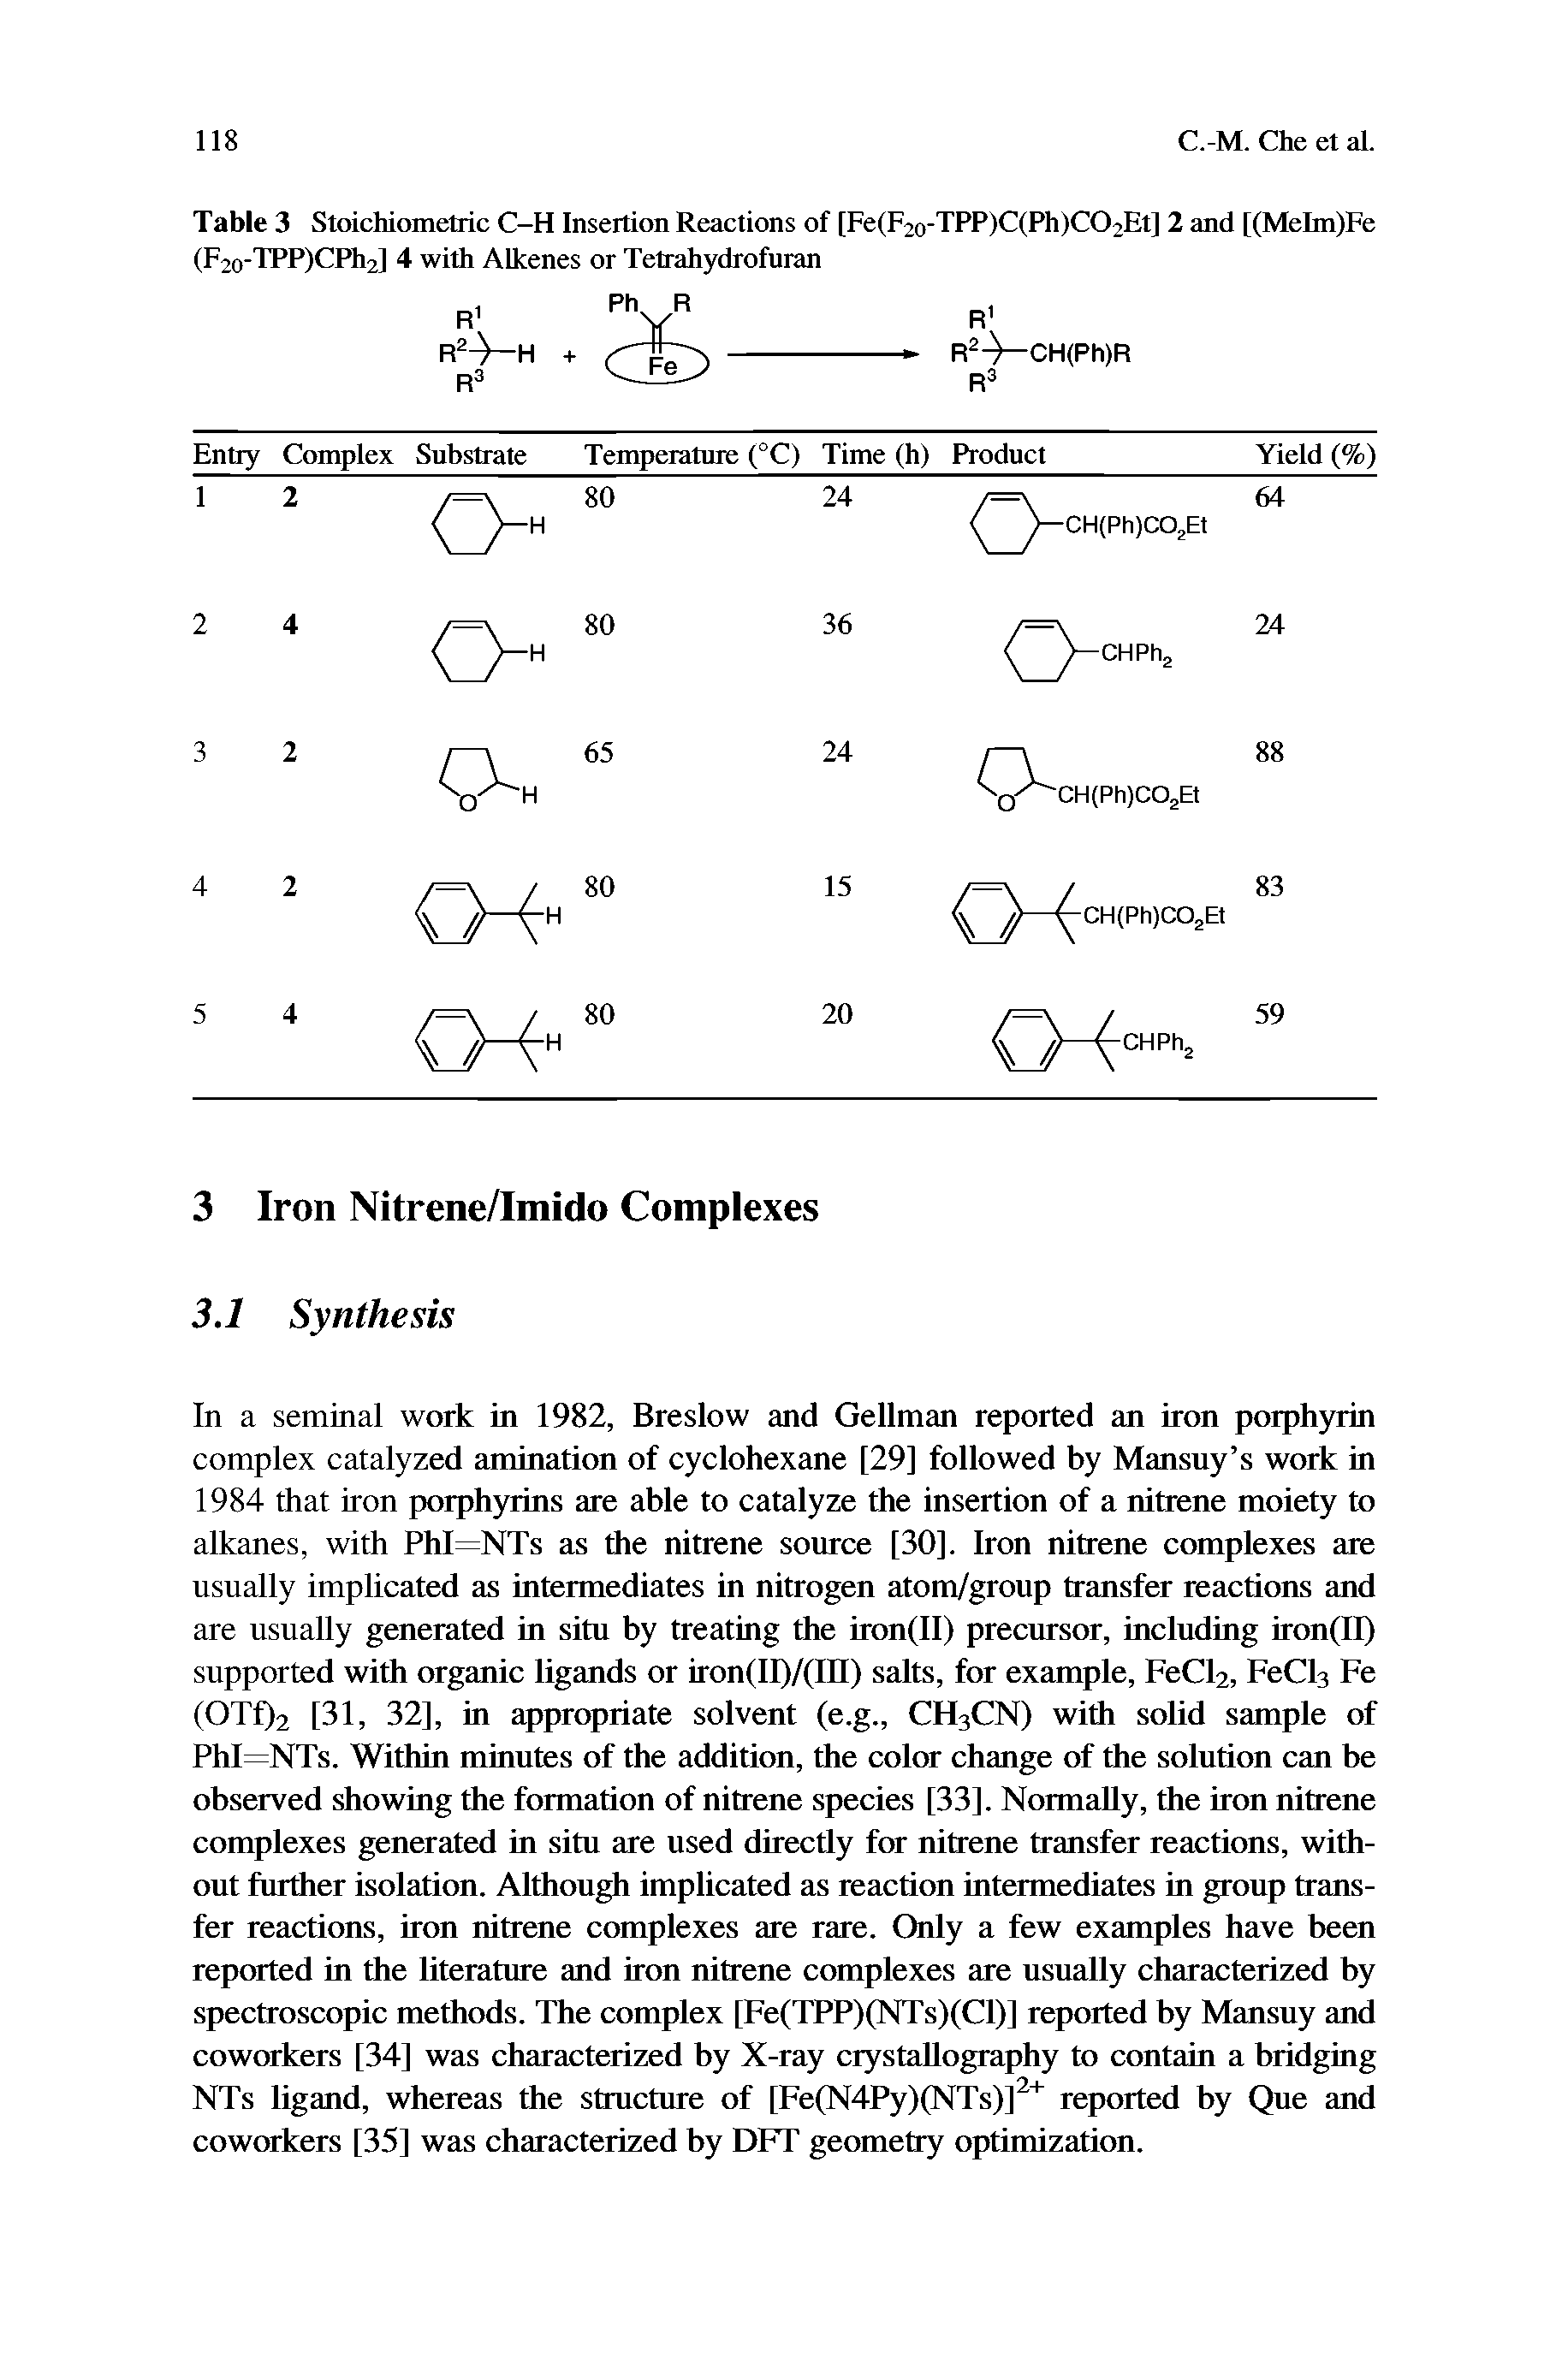 Table 3 Stoichiometric C-H Insertion Reactions of [Fe(F20-TPP)C(Ph)CO2Et] 2 and [(MeIm)Fe (F2o-TPP)CPli2] 4 with Alkenes or Tetrahydrofuran...